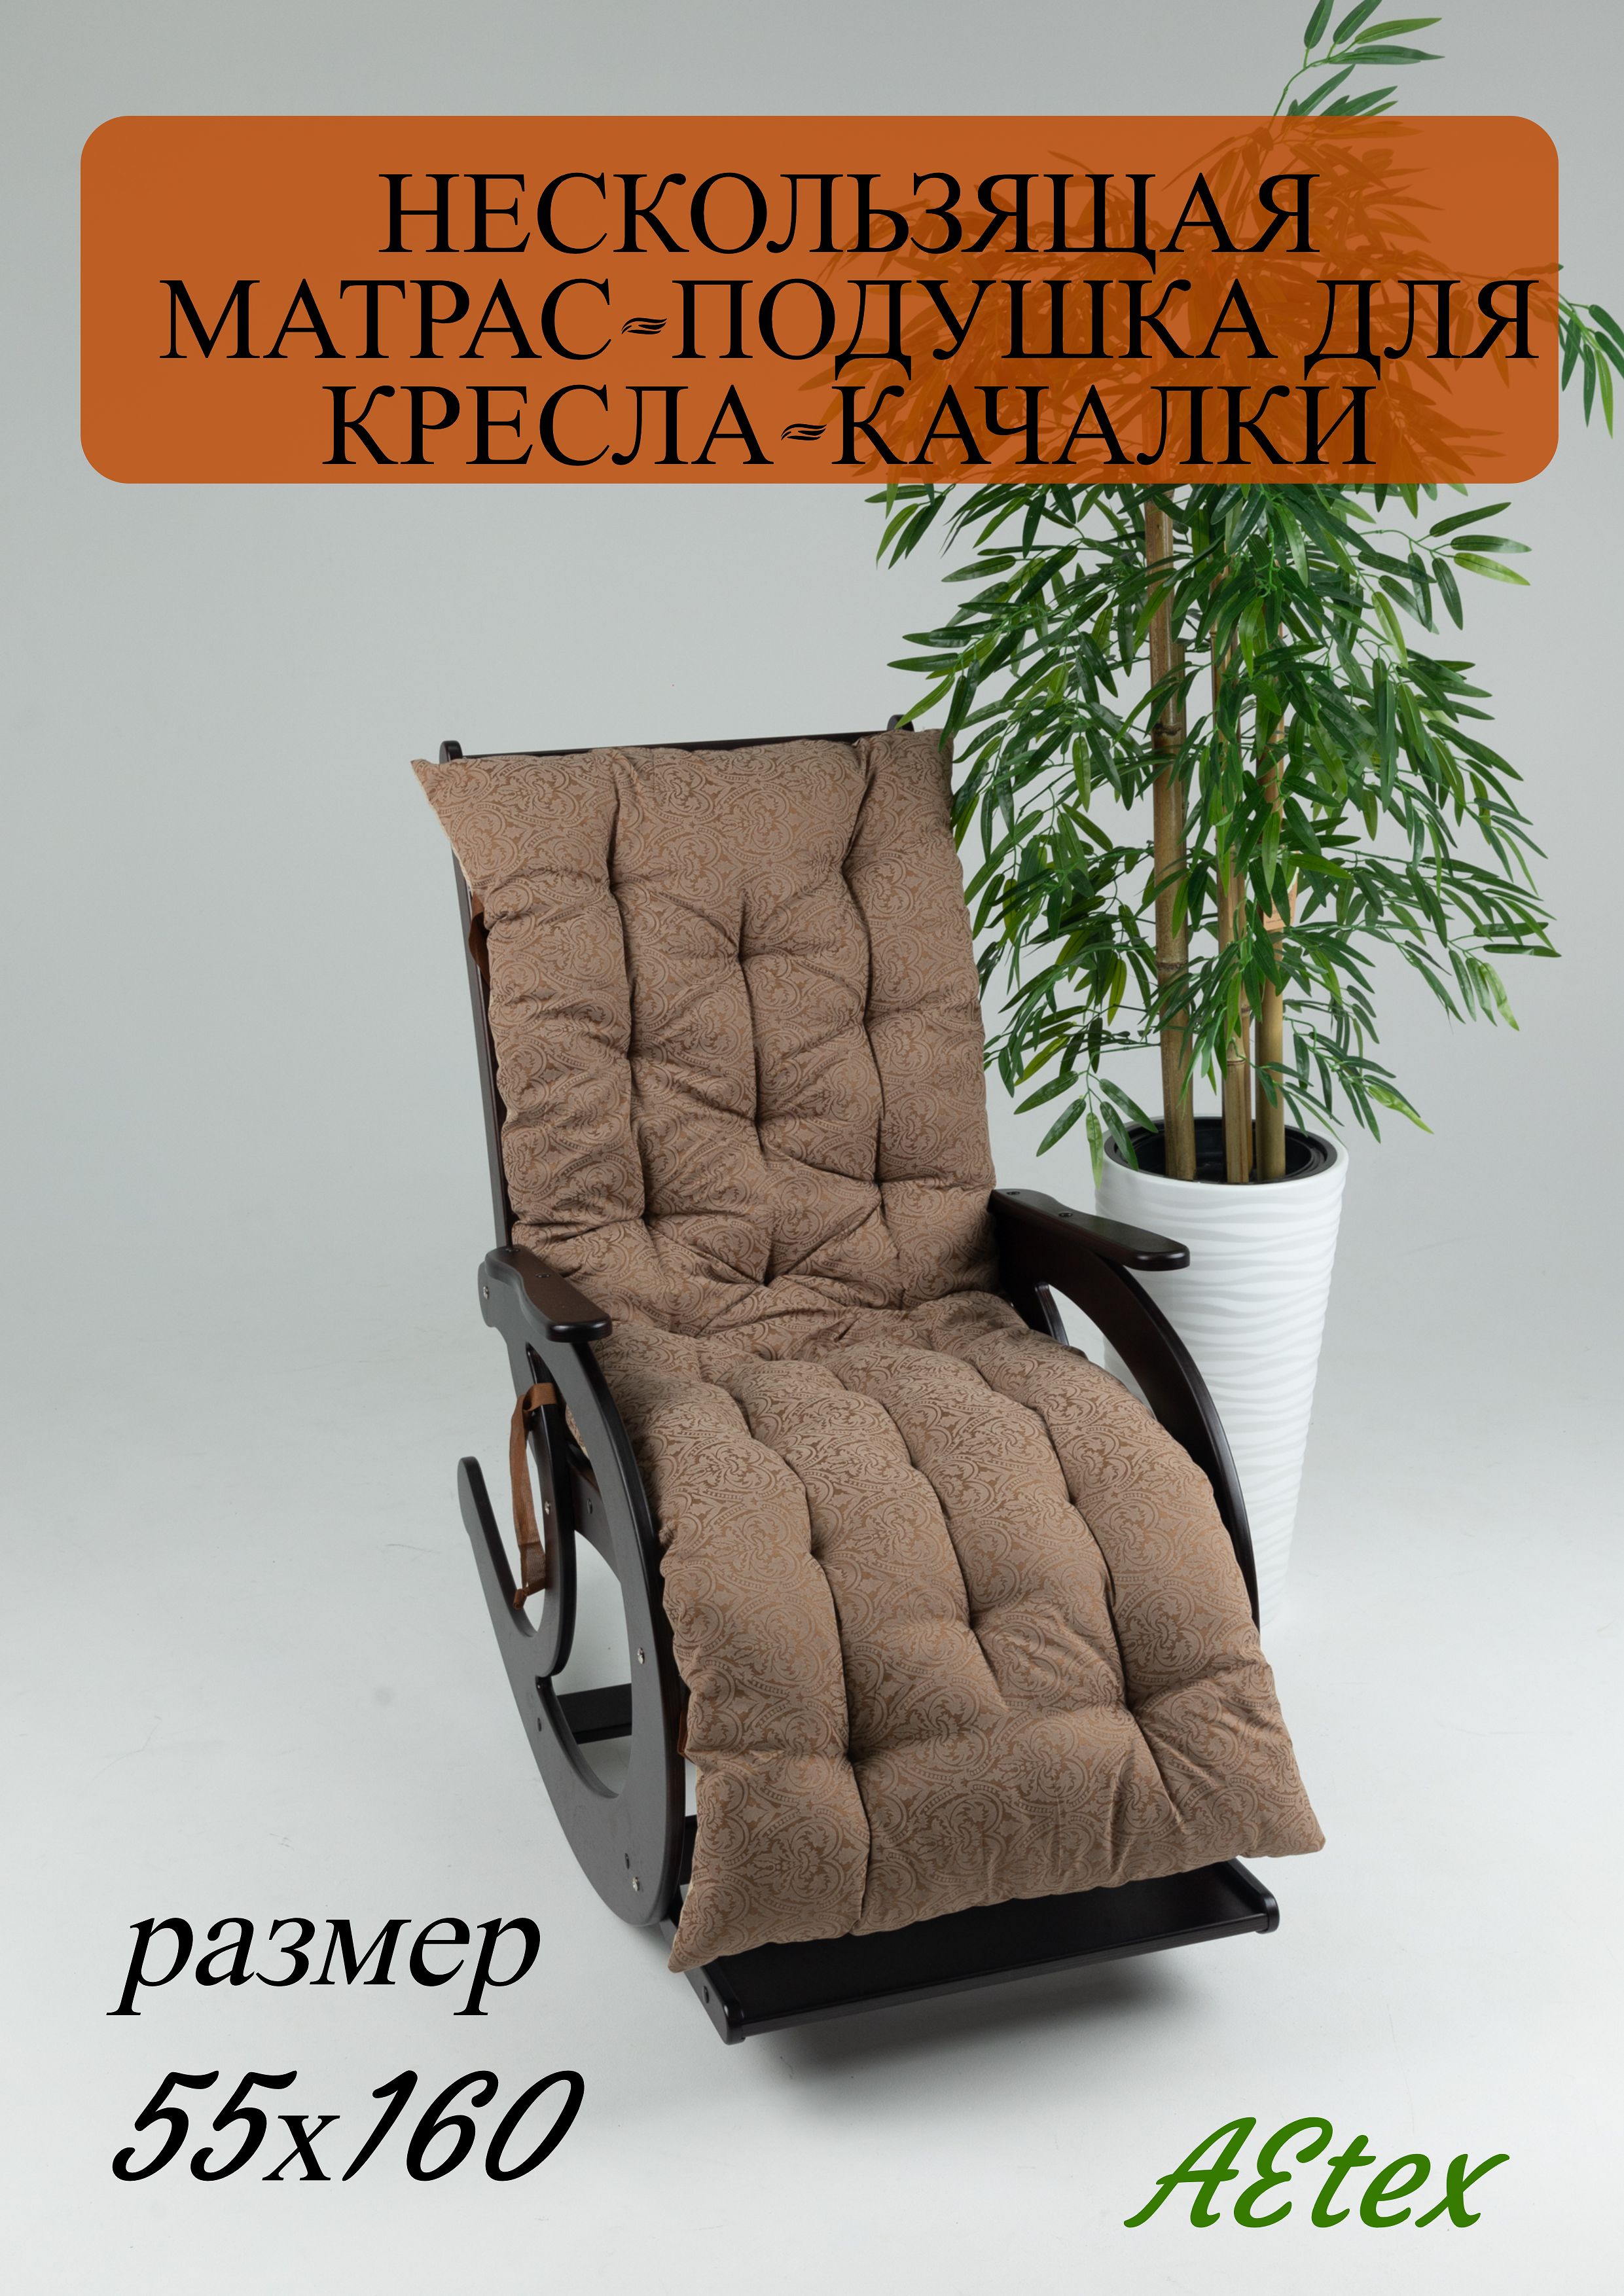 Матрасдлякресла-качалкиМатрас-подушканастул,кресло-качалку,садовуюмебель,55х160см